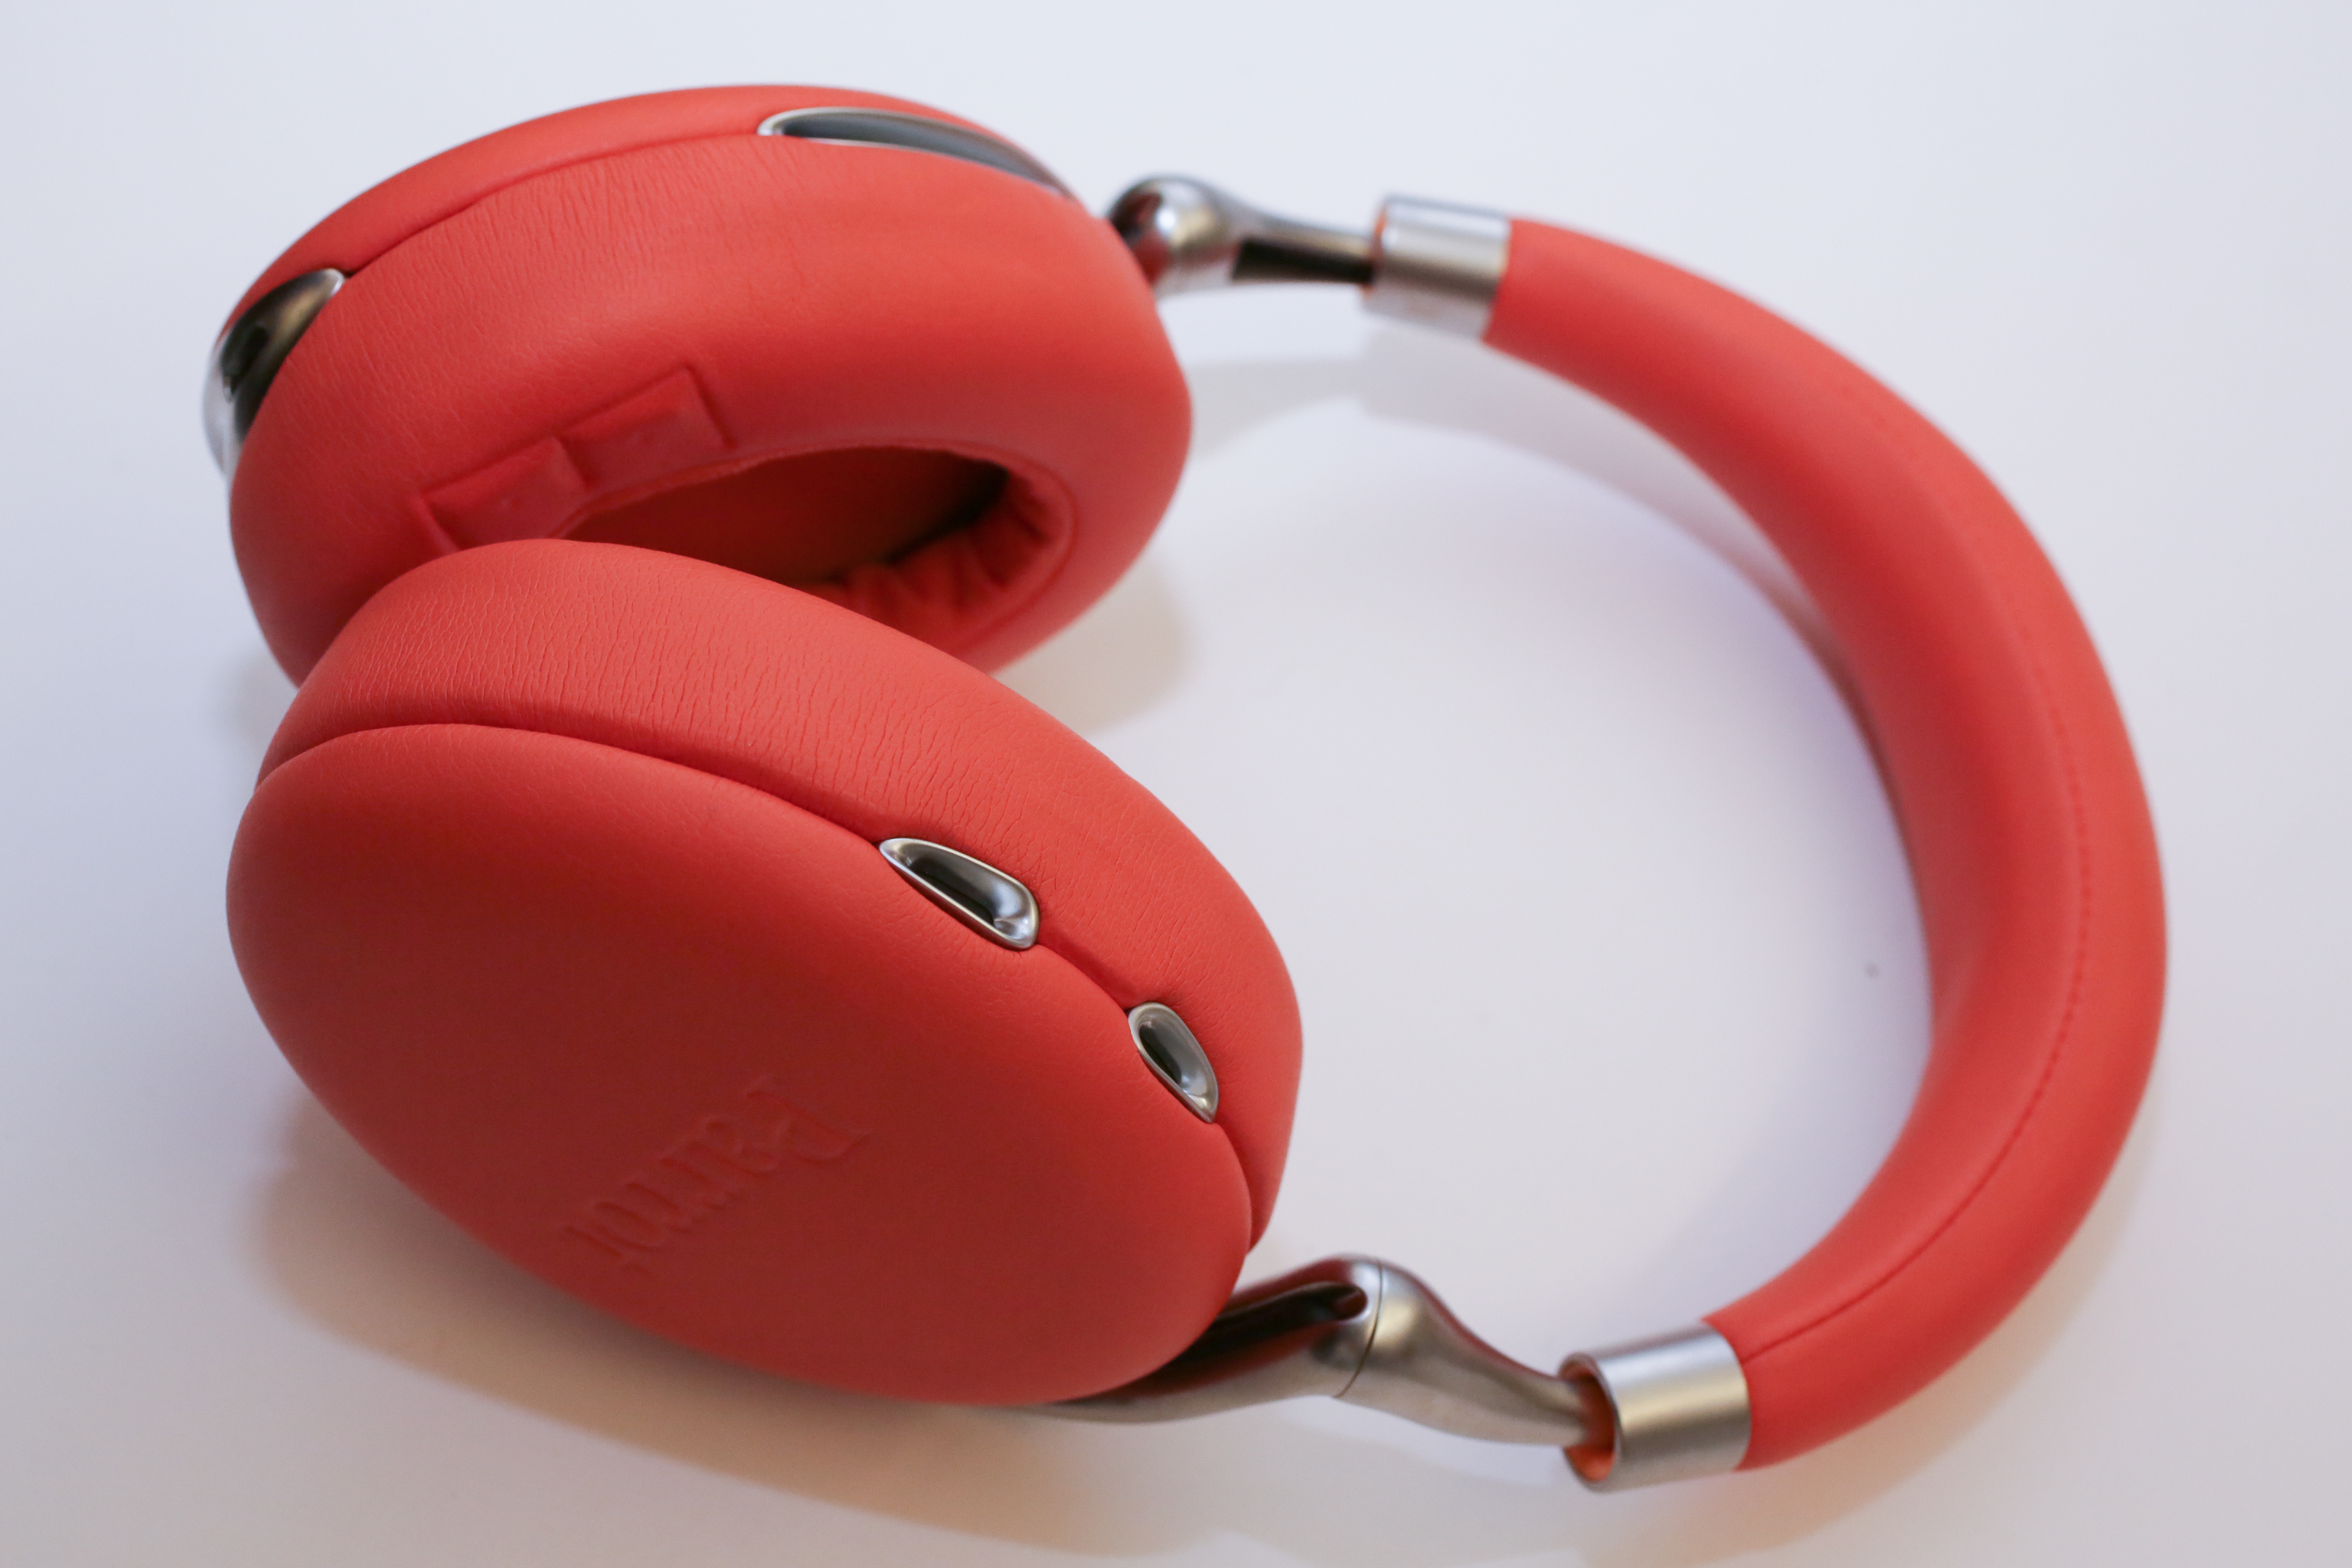 parrot-zik-2-headphones-product-photos07.jpg